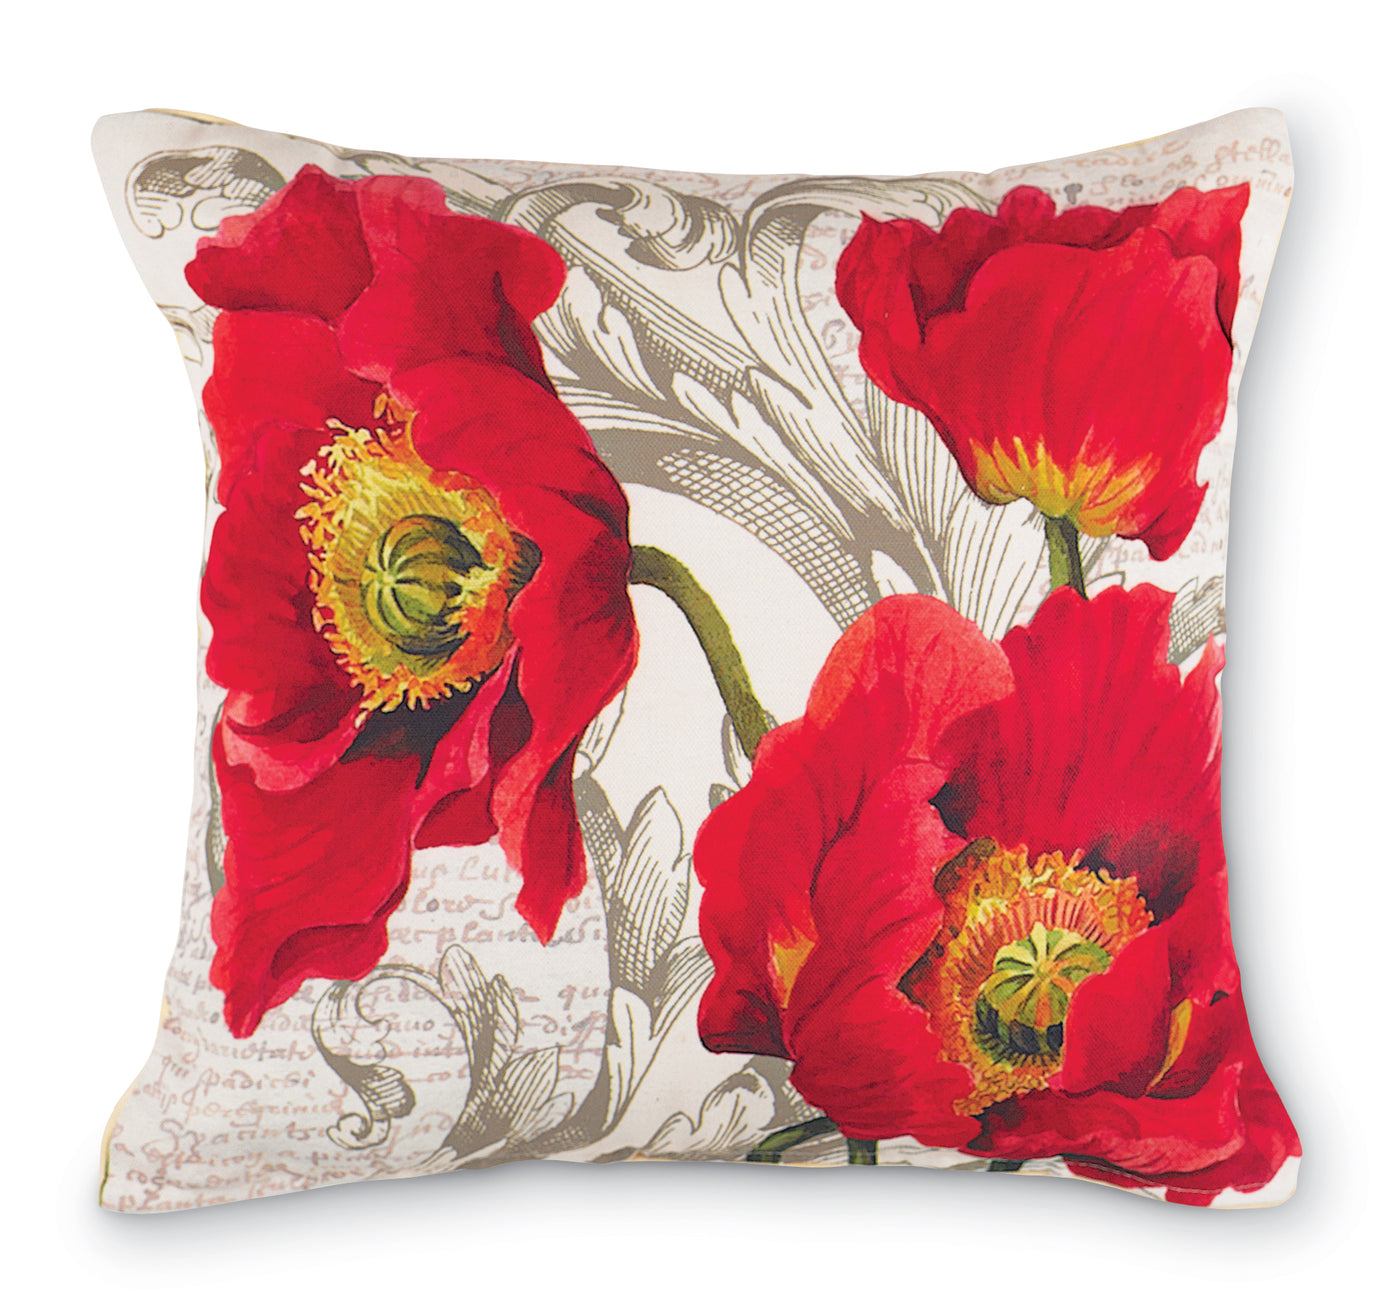 Red Poppy Pillow